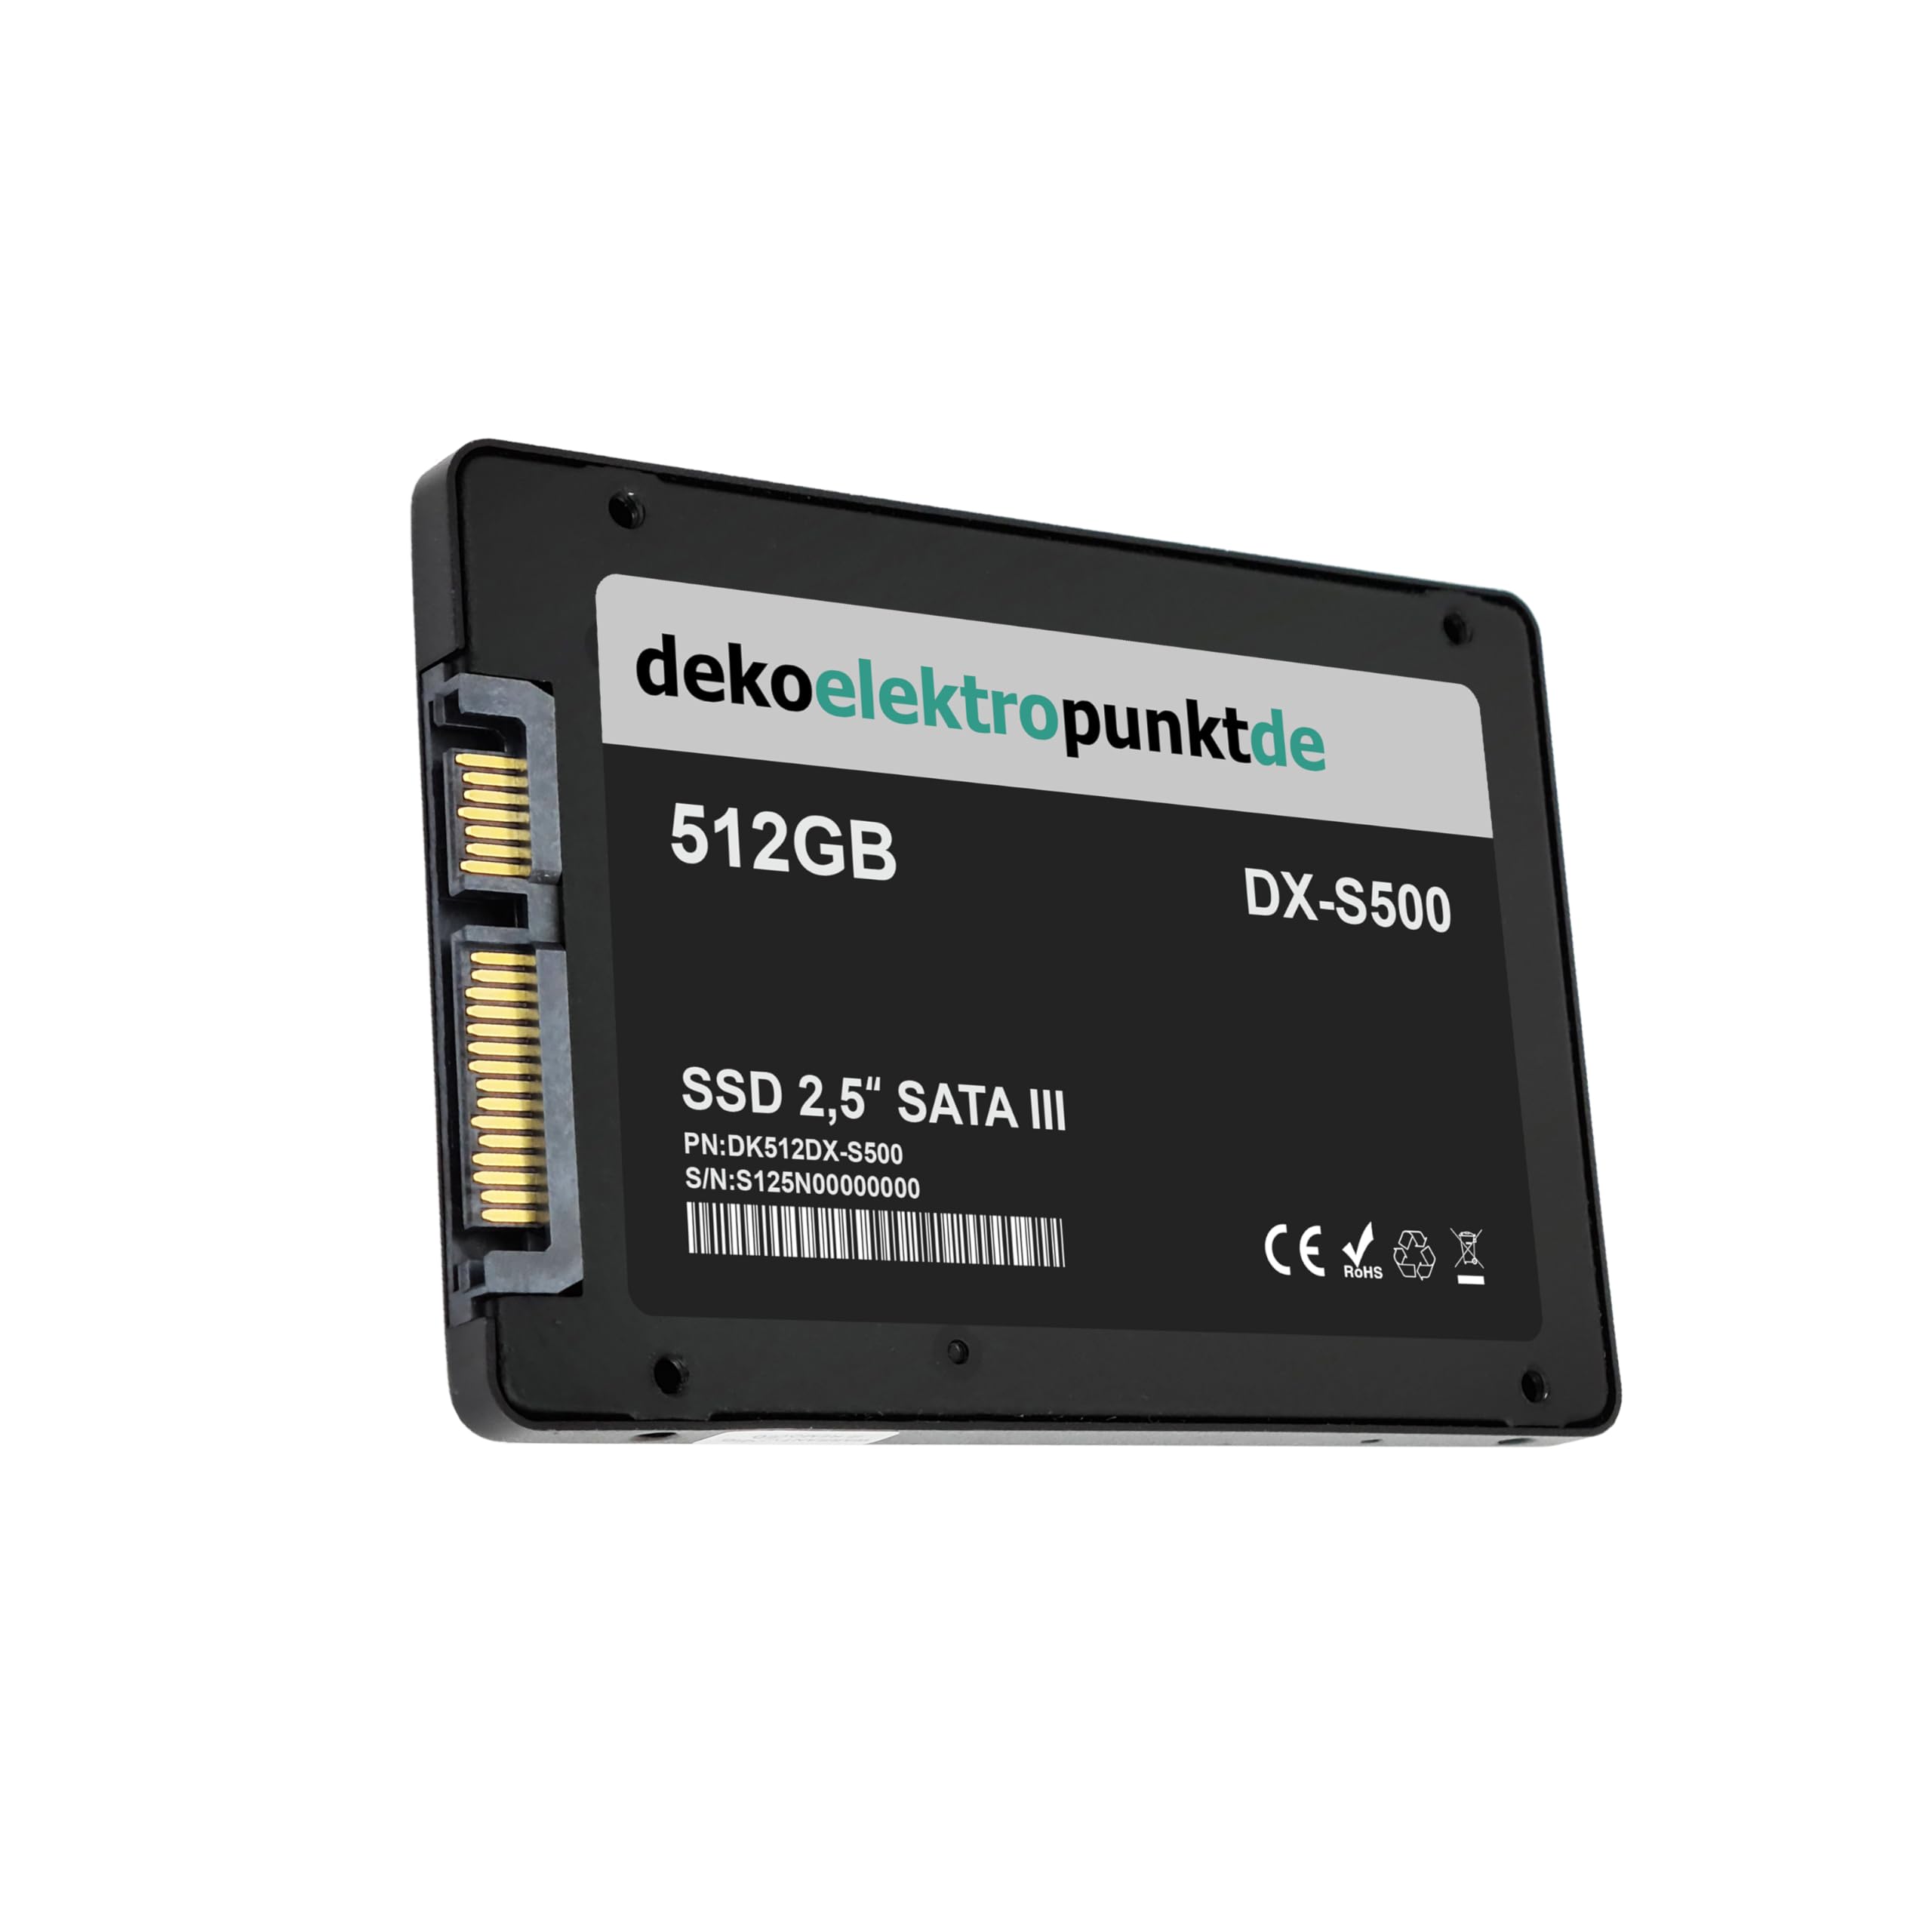 dekoelektropunktde 512GB SSD Festplatte kompatibel mit HP dv2016 dv7-4150 dv2511 dv2910 dv7-1137eo dv7-2051